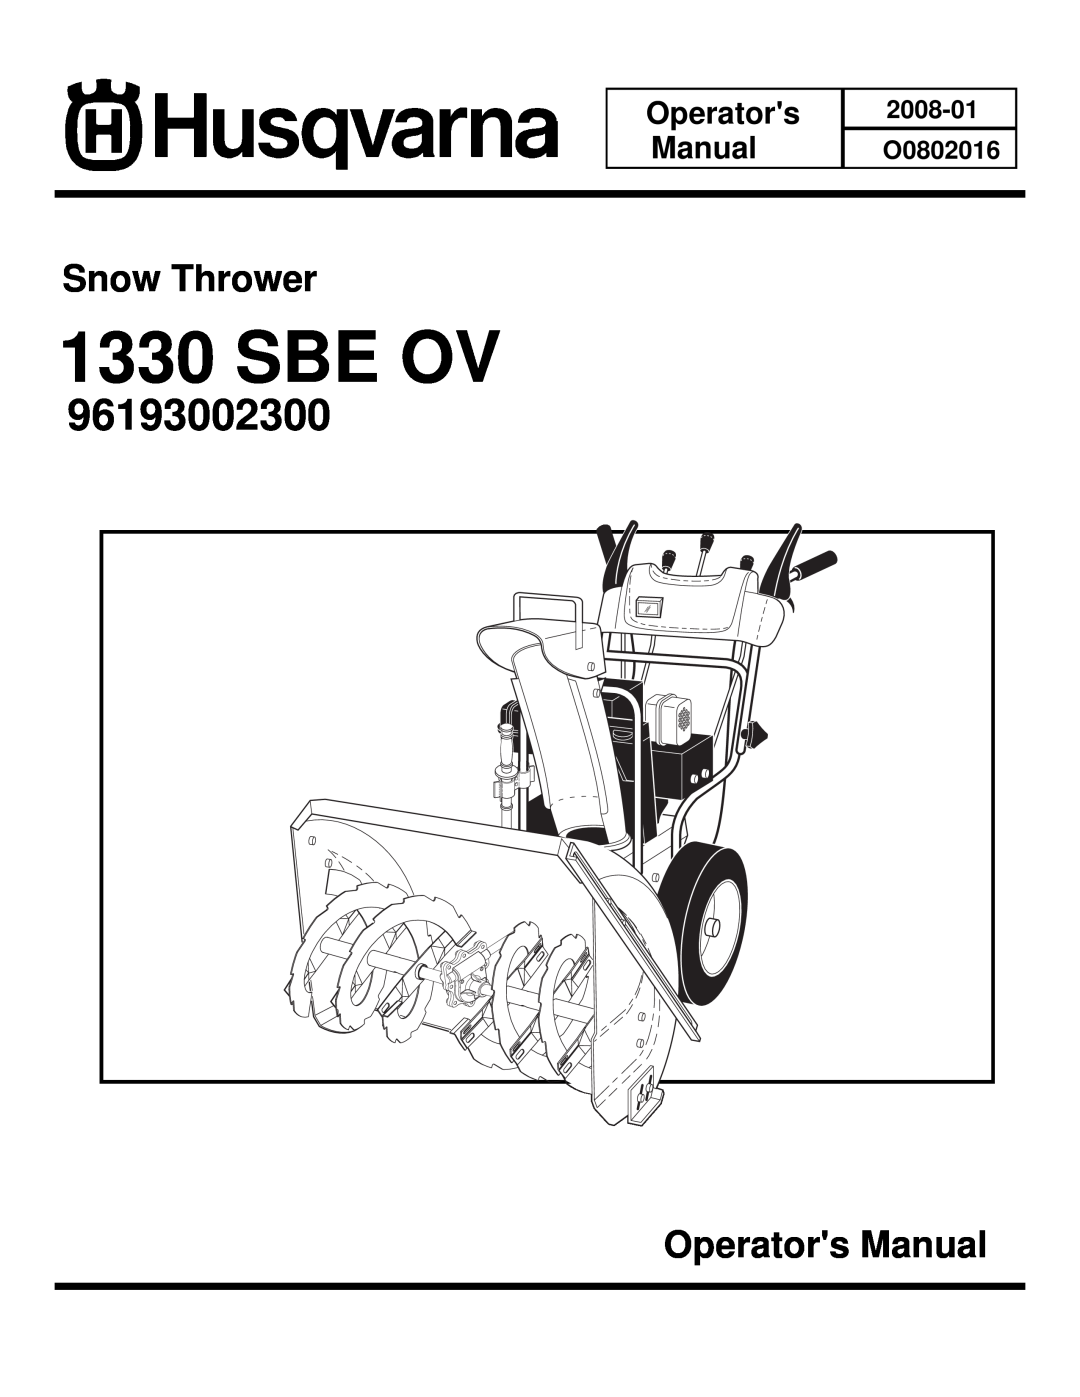 Husqvarna 96193002300 manual Sbe Ov, Snow Thrower, Operators Manual, 2008-01 O0802016 